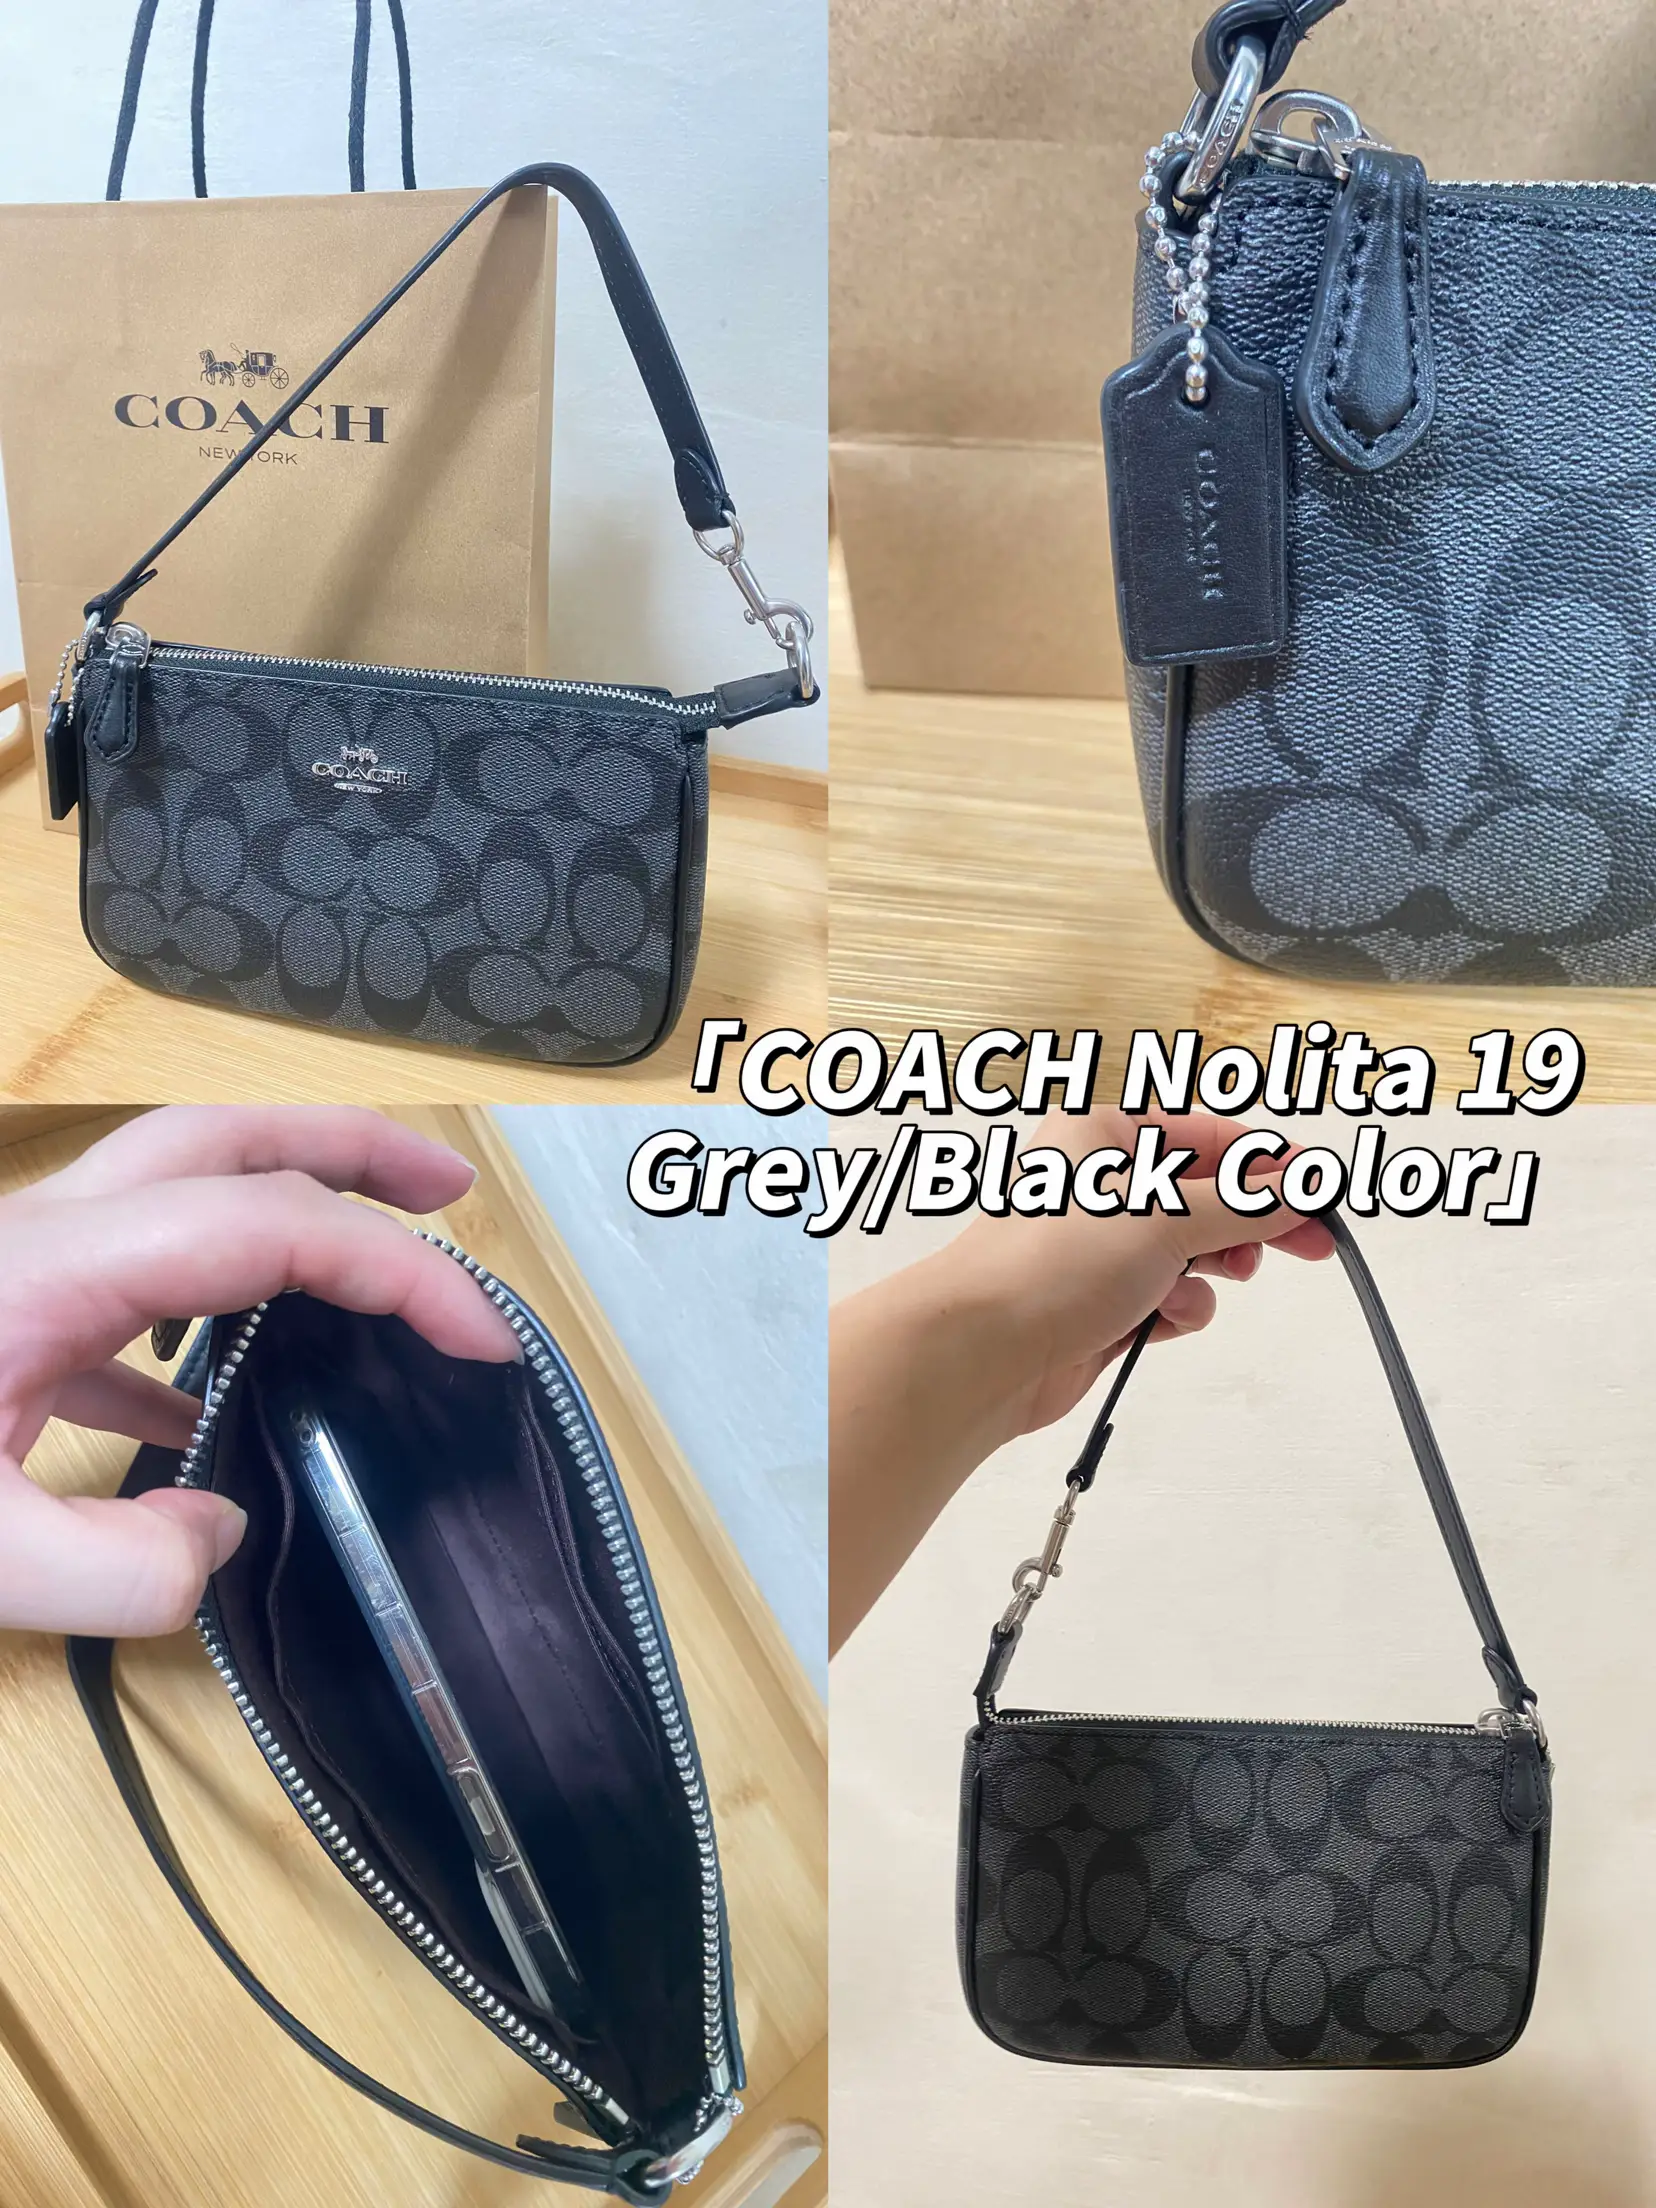 Coach Nolita 19 Bag Purse